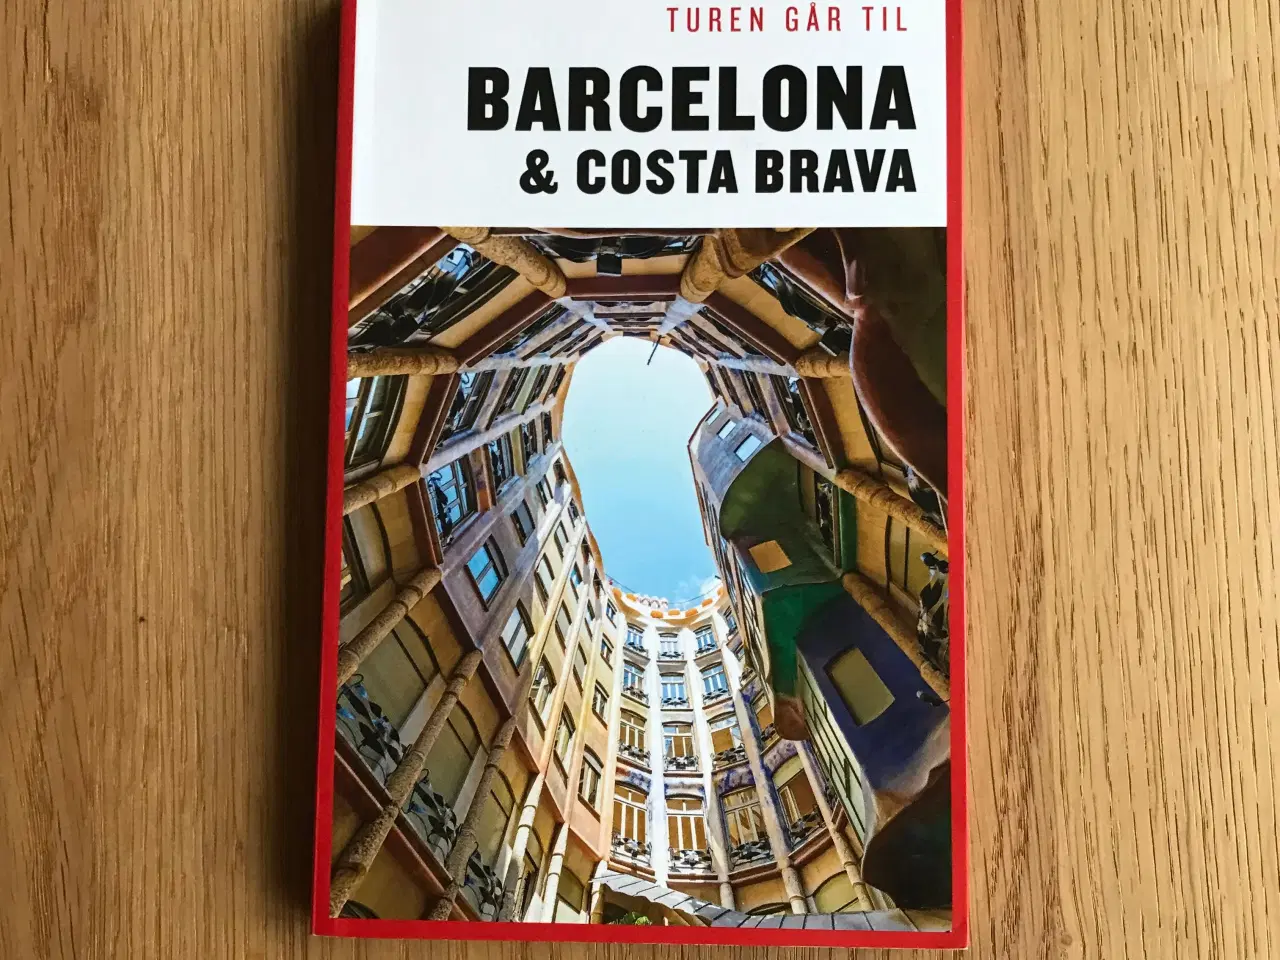 Billede 1 - Turen går til Barcelona & Costa Brava